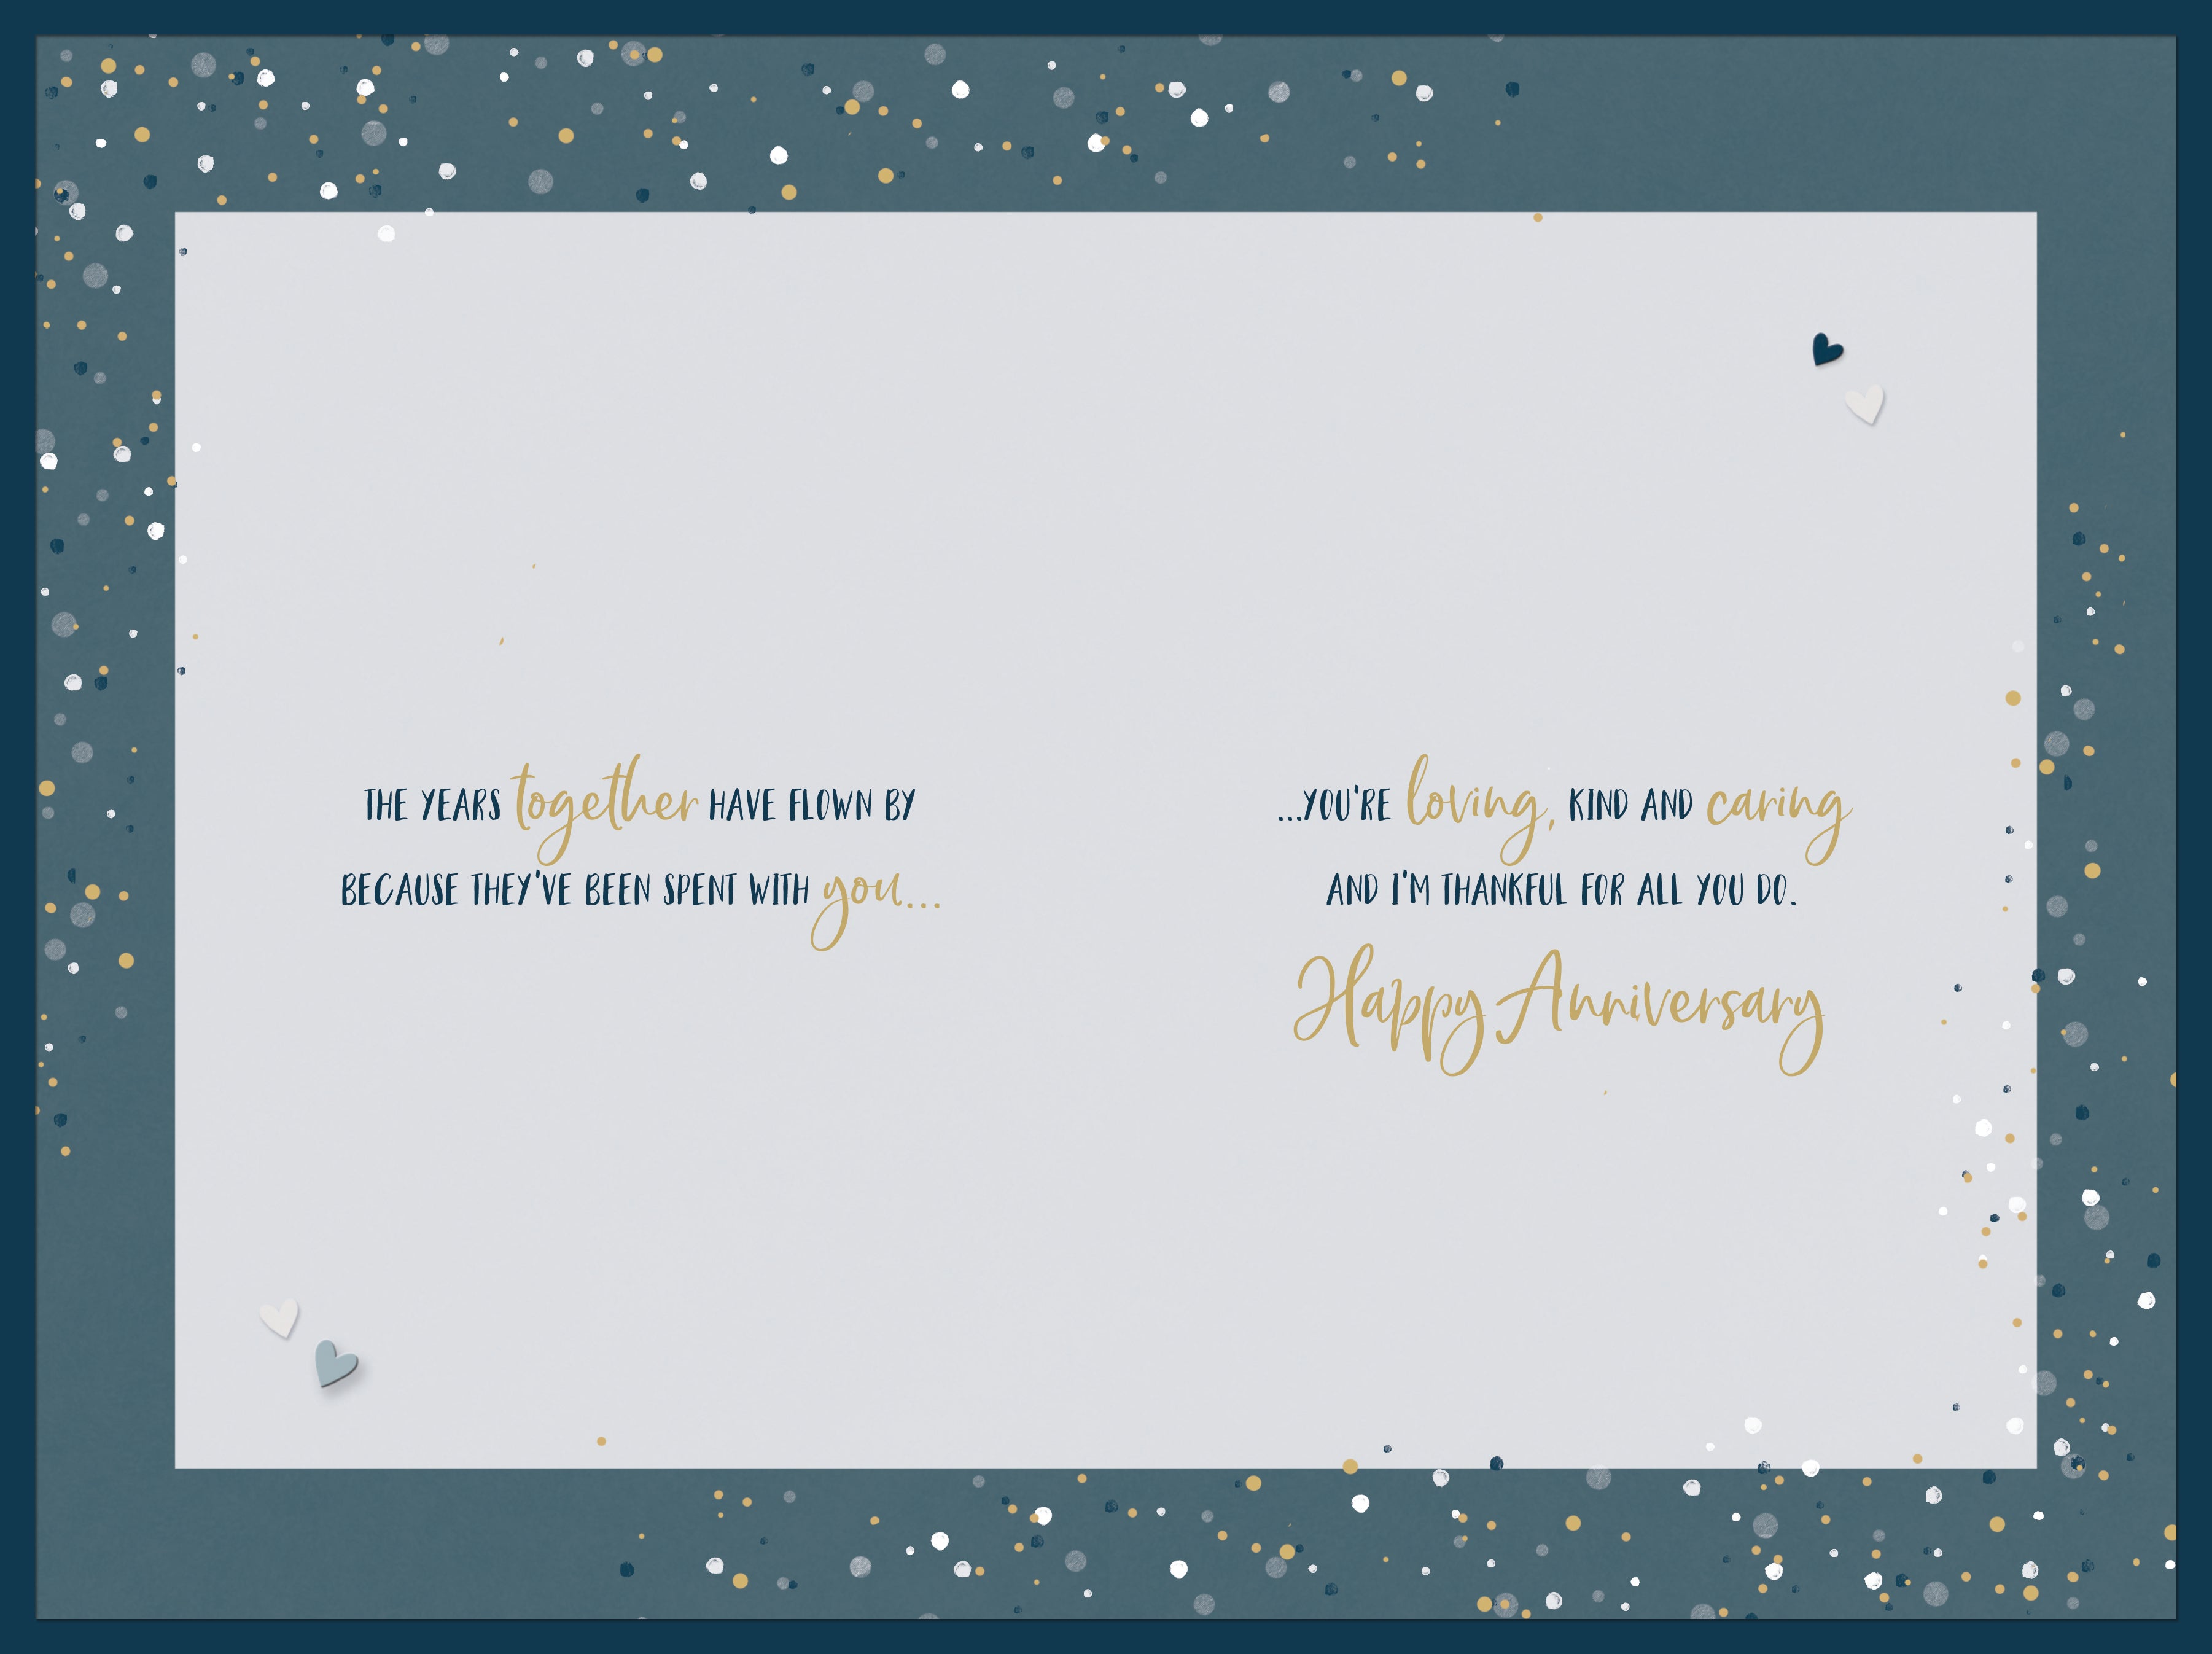 Husband Anniversary Card - Champagne Bottle